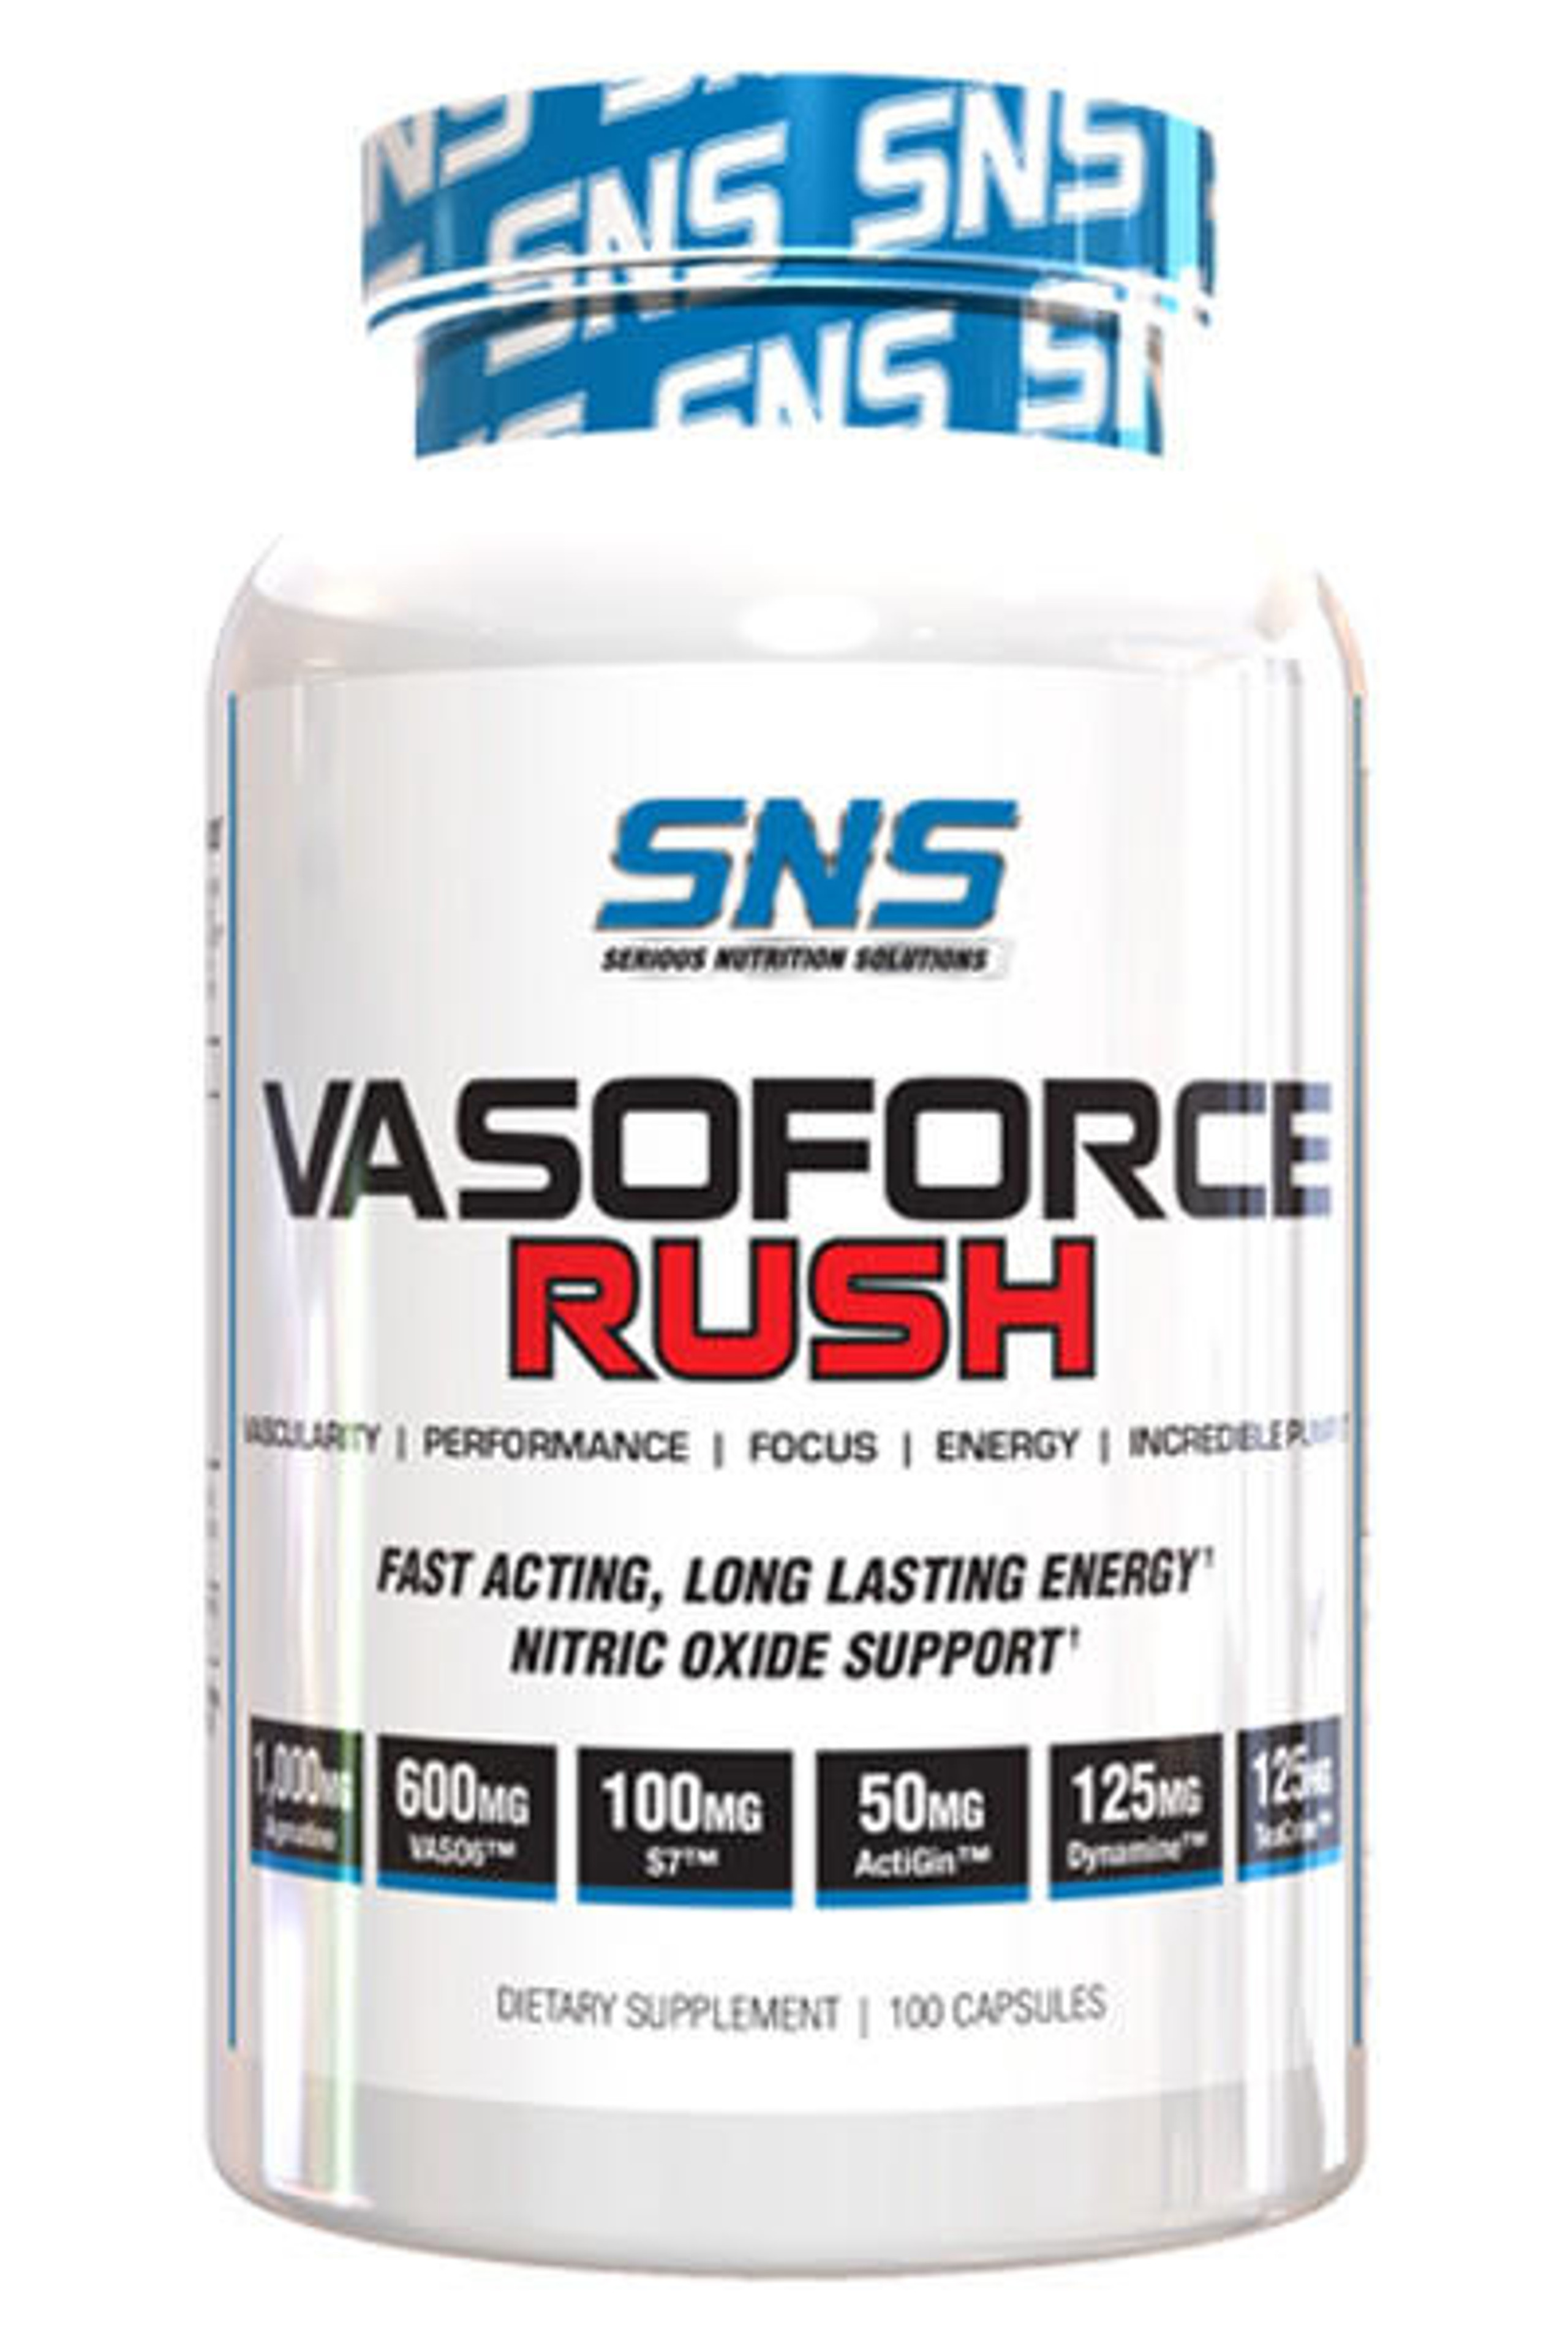 Vasoforce Rush by SNS